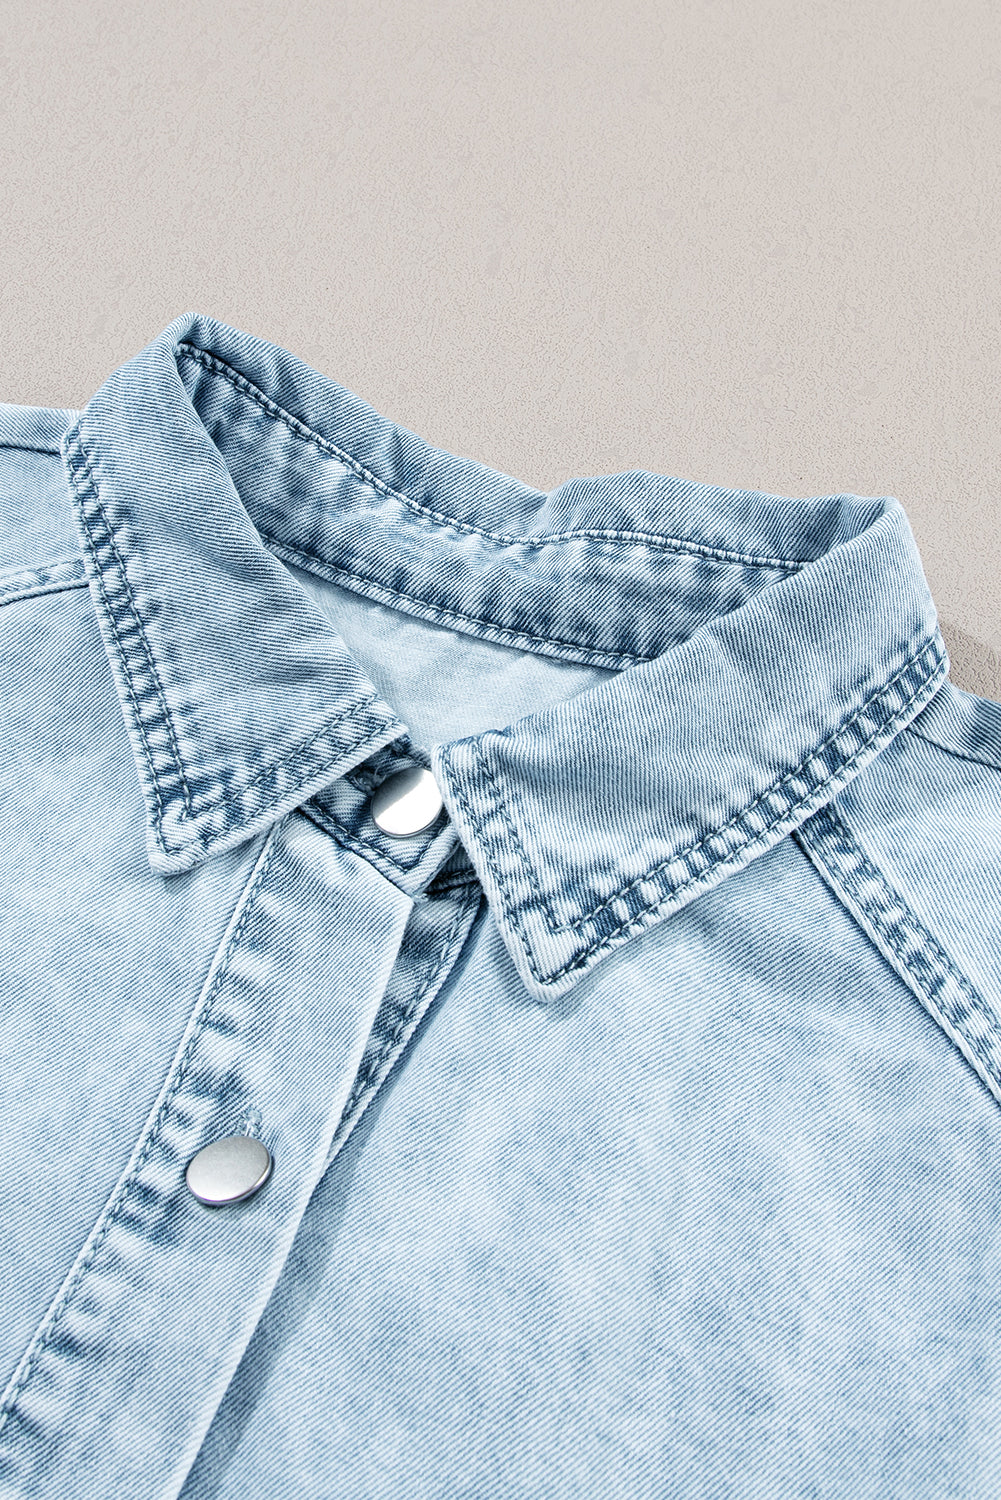 Beau Blue Mineral Wash Ruffled Short Sleeve Buttoned Denim Dress